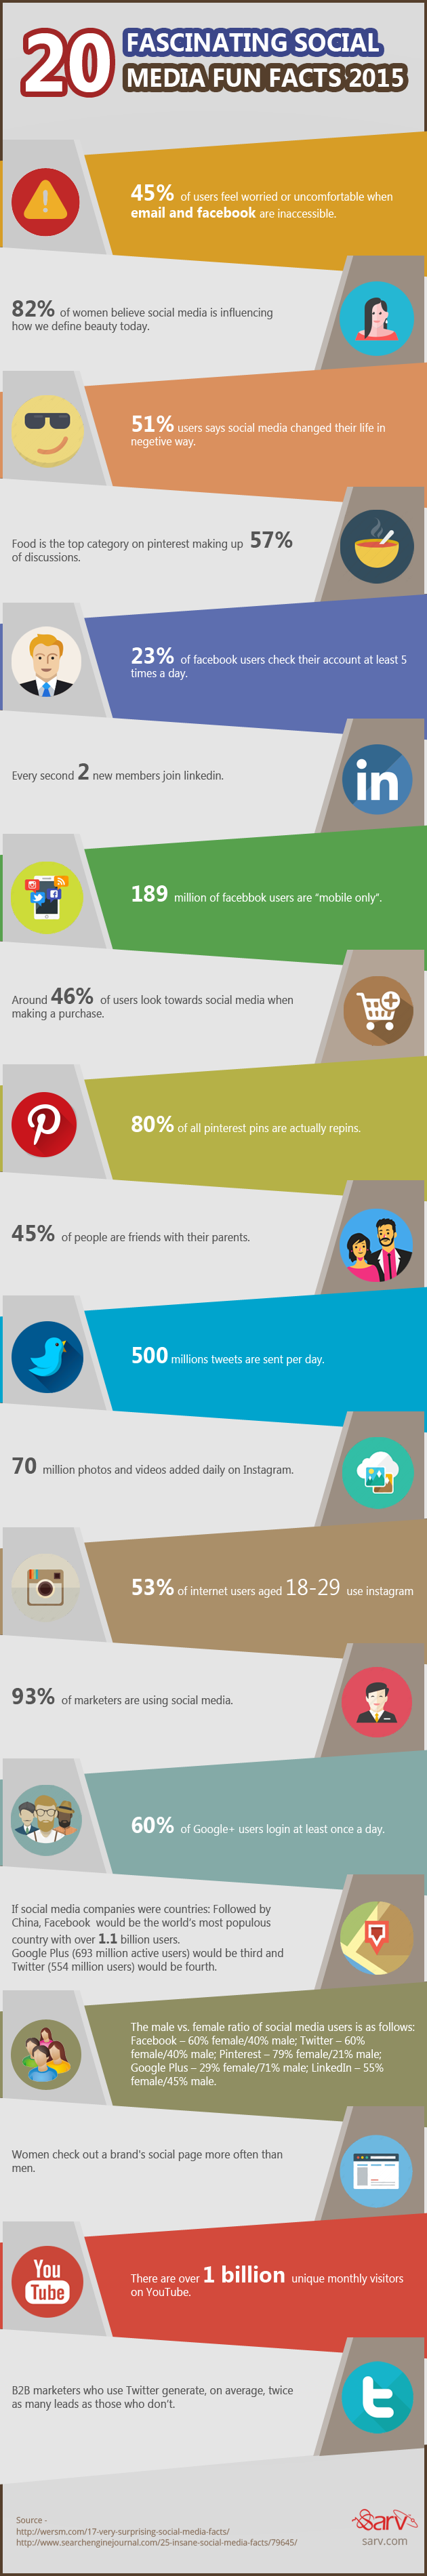 Fascinating-Social-Media-Fun-Facts-2015